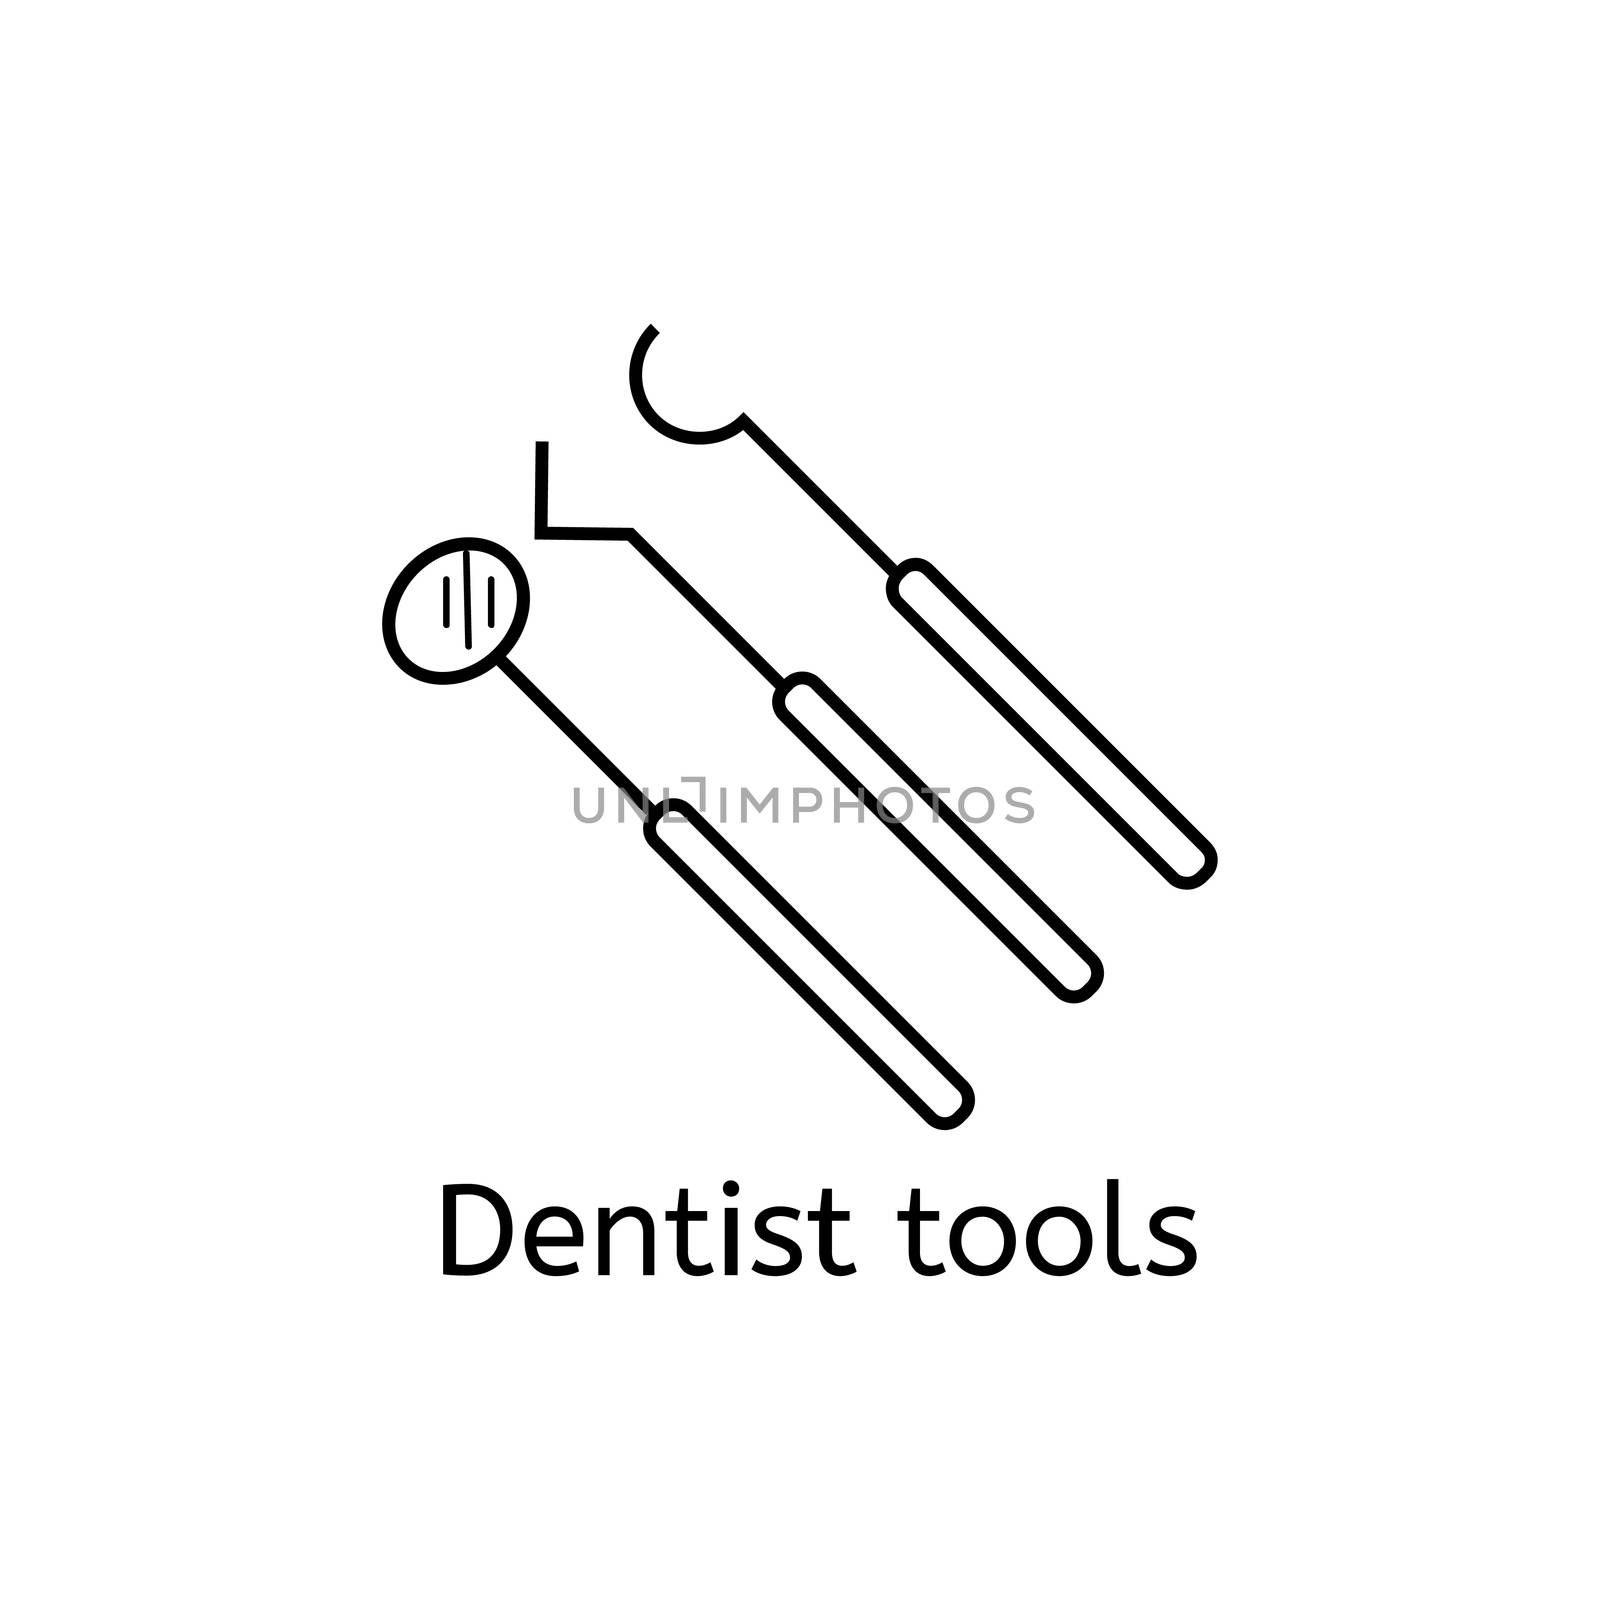 Dental Instrument icon set. Isolated on white background. by Elena_Garder